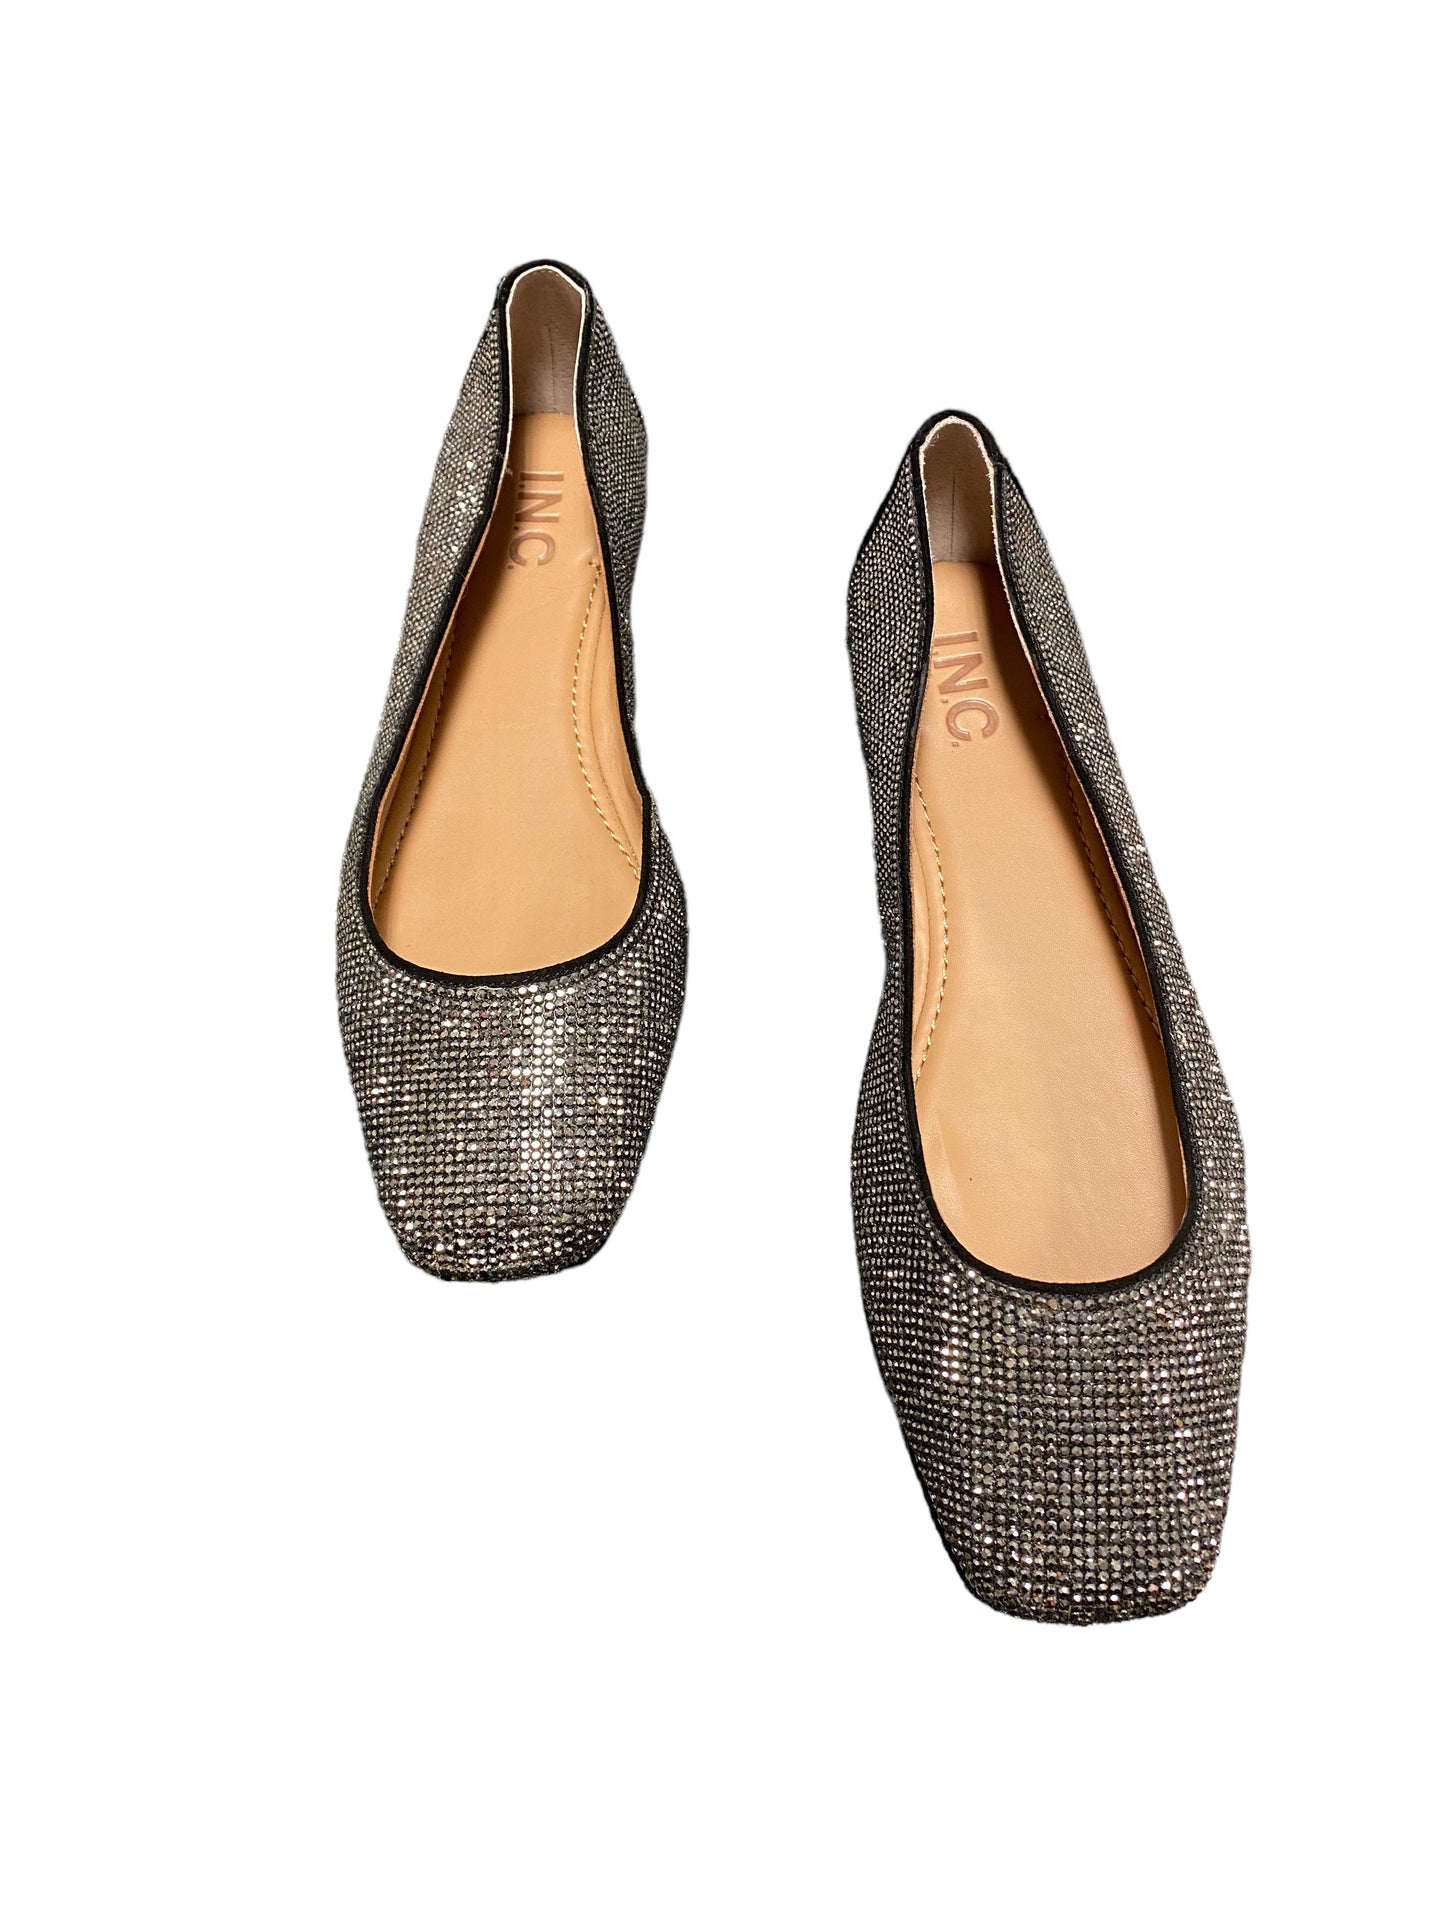 Silver Shoes Flats Inc, Size 8.5